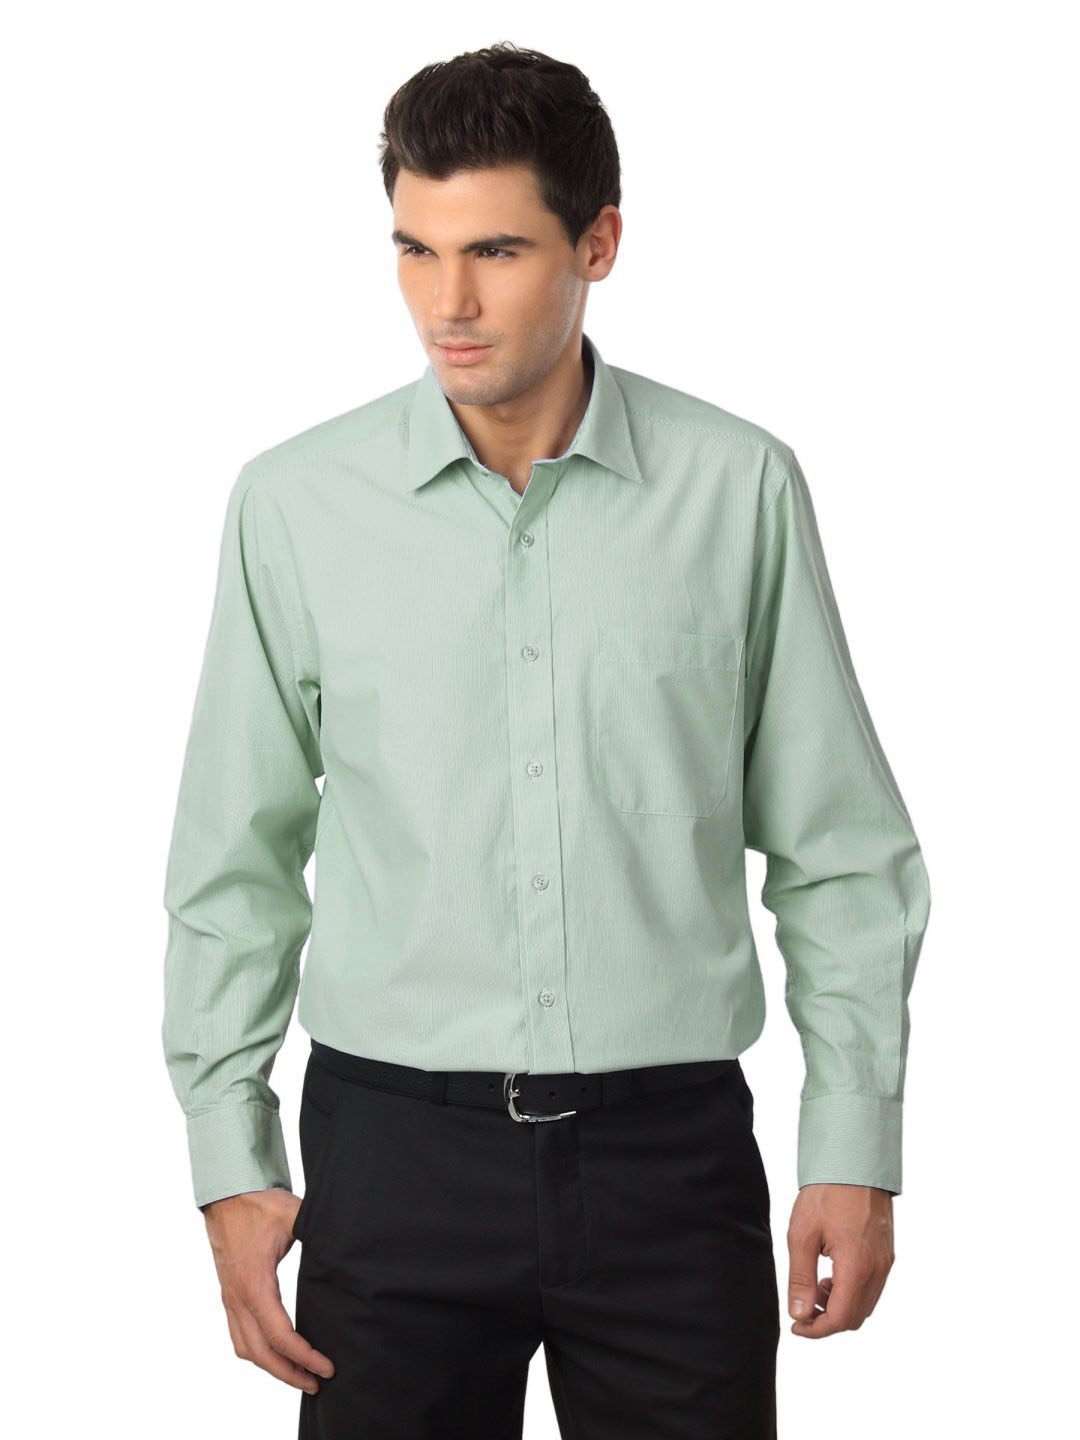 Peter England Mens Formal Shirt : RSP3106 | Buy Online at ShopClues